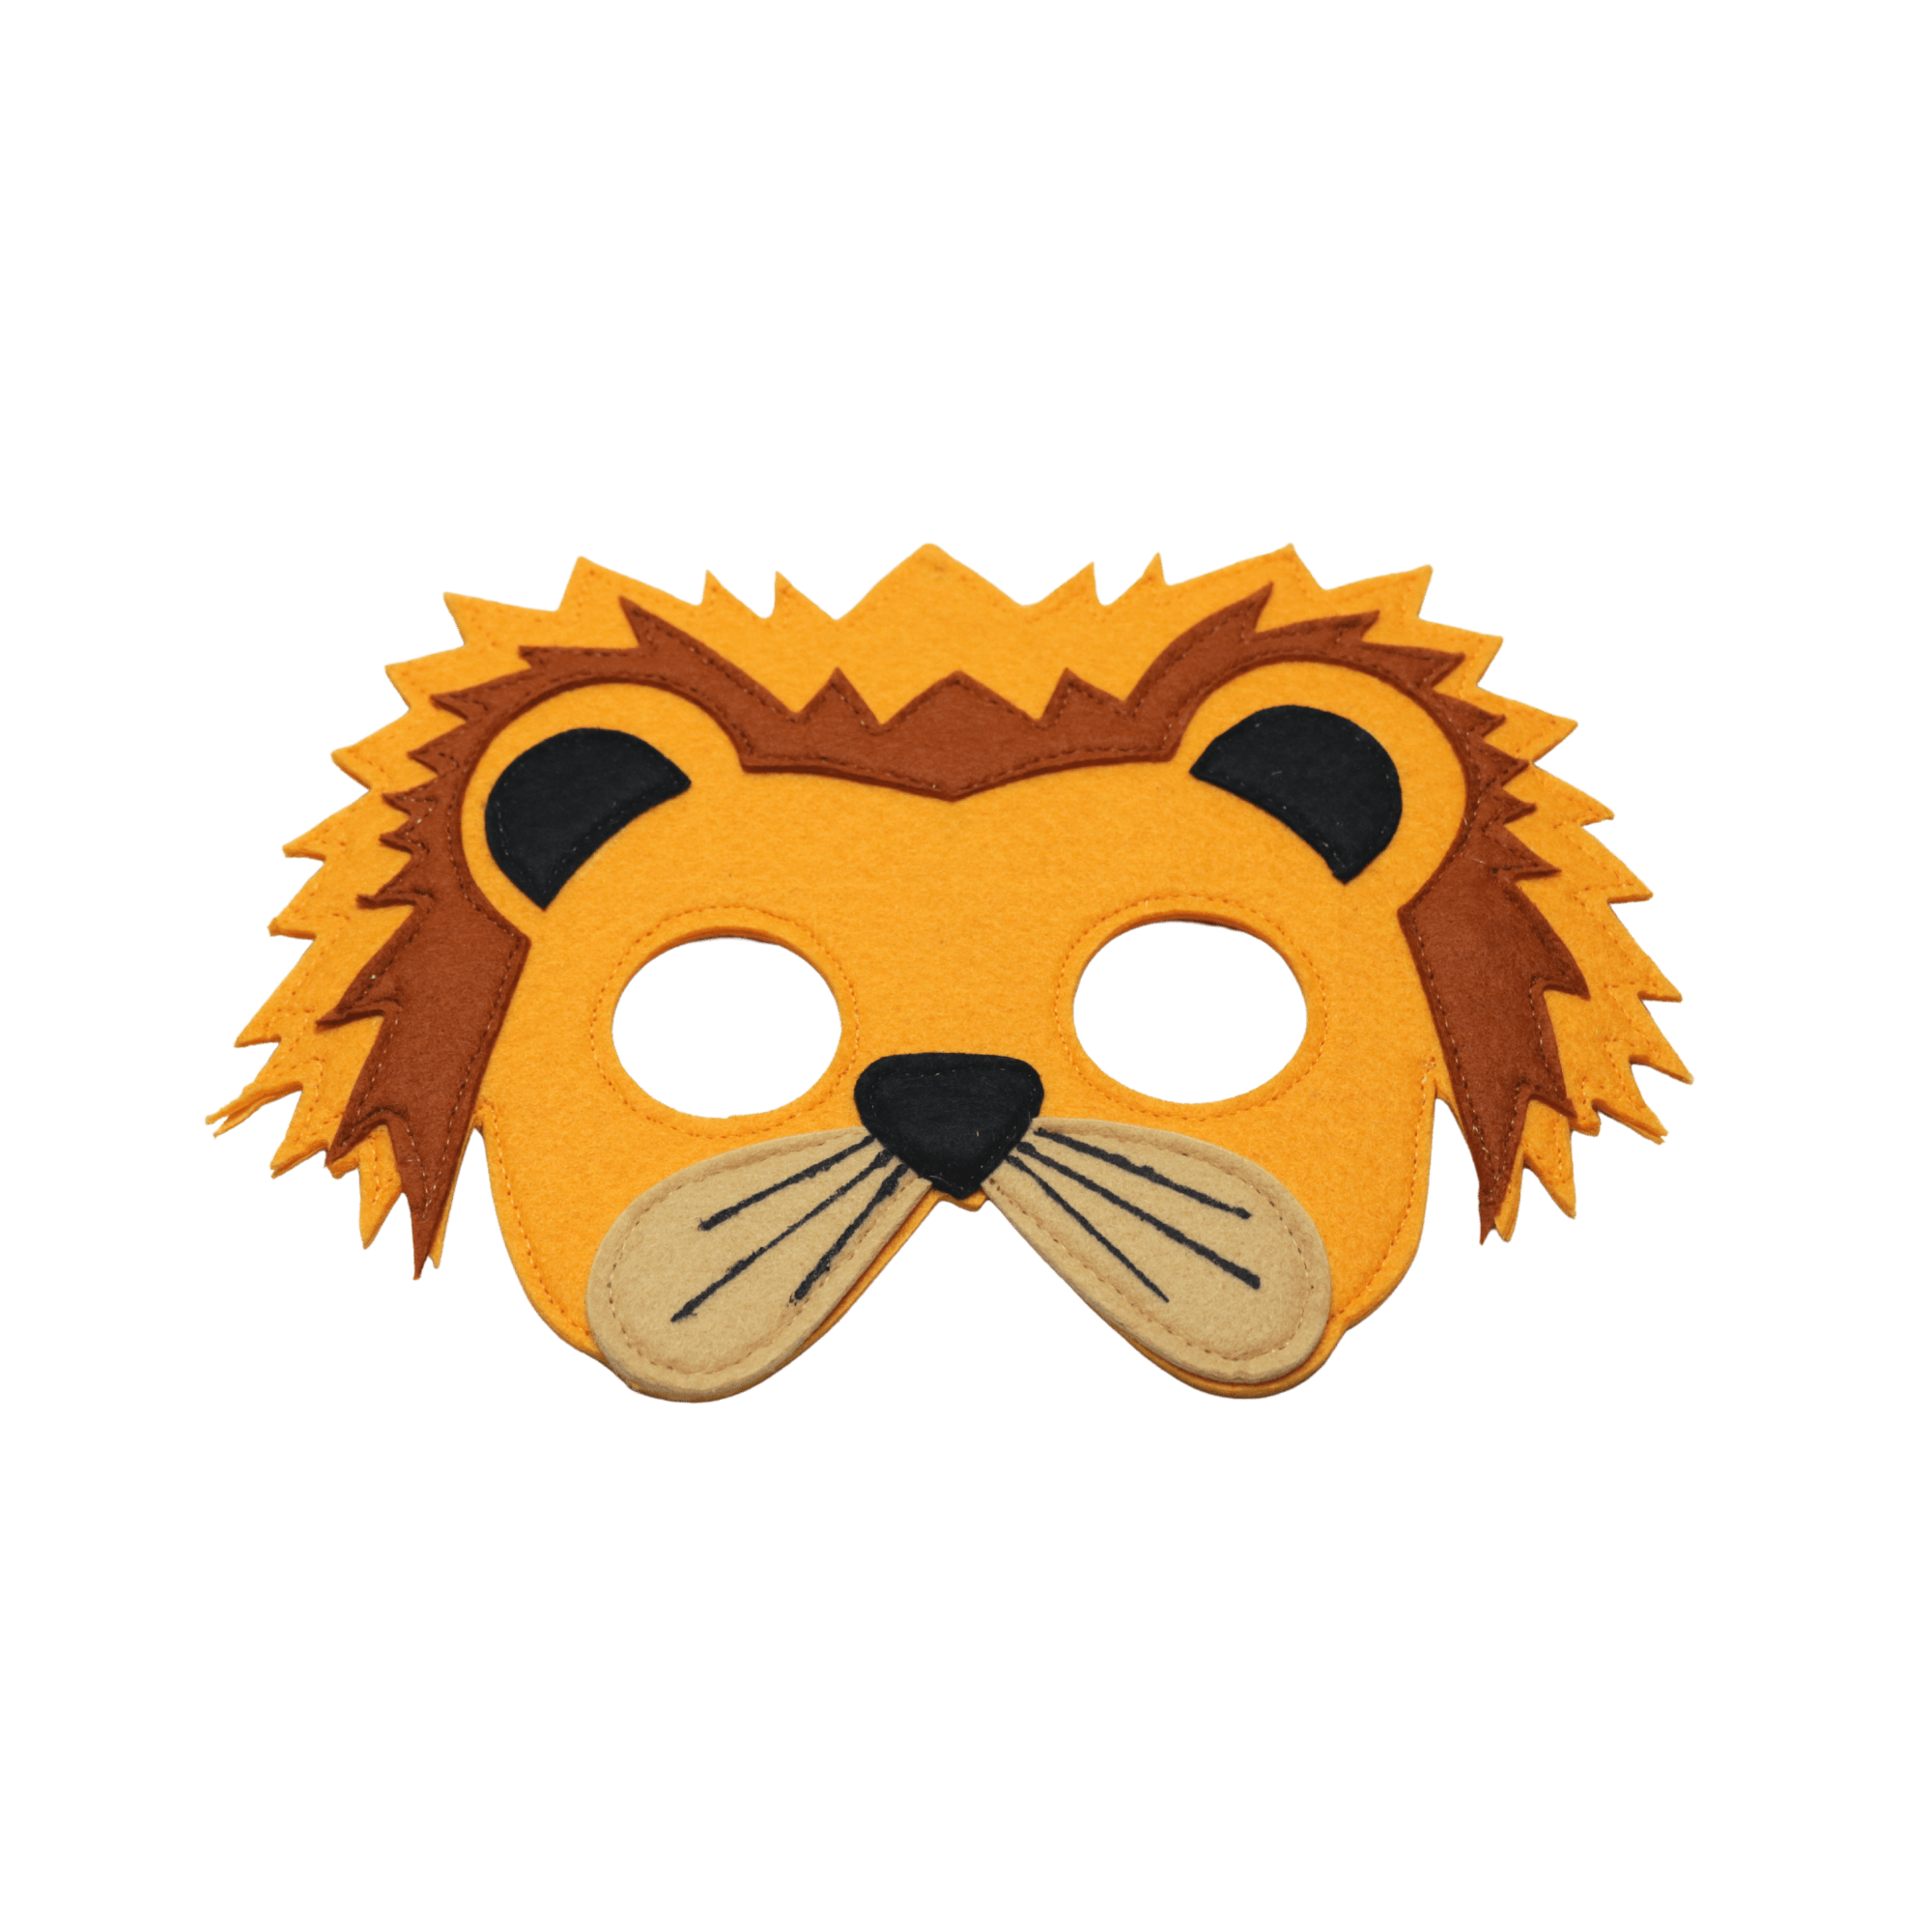 Lion Felt Mask